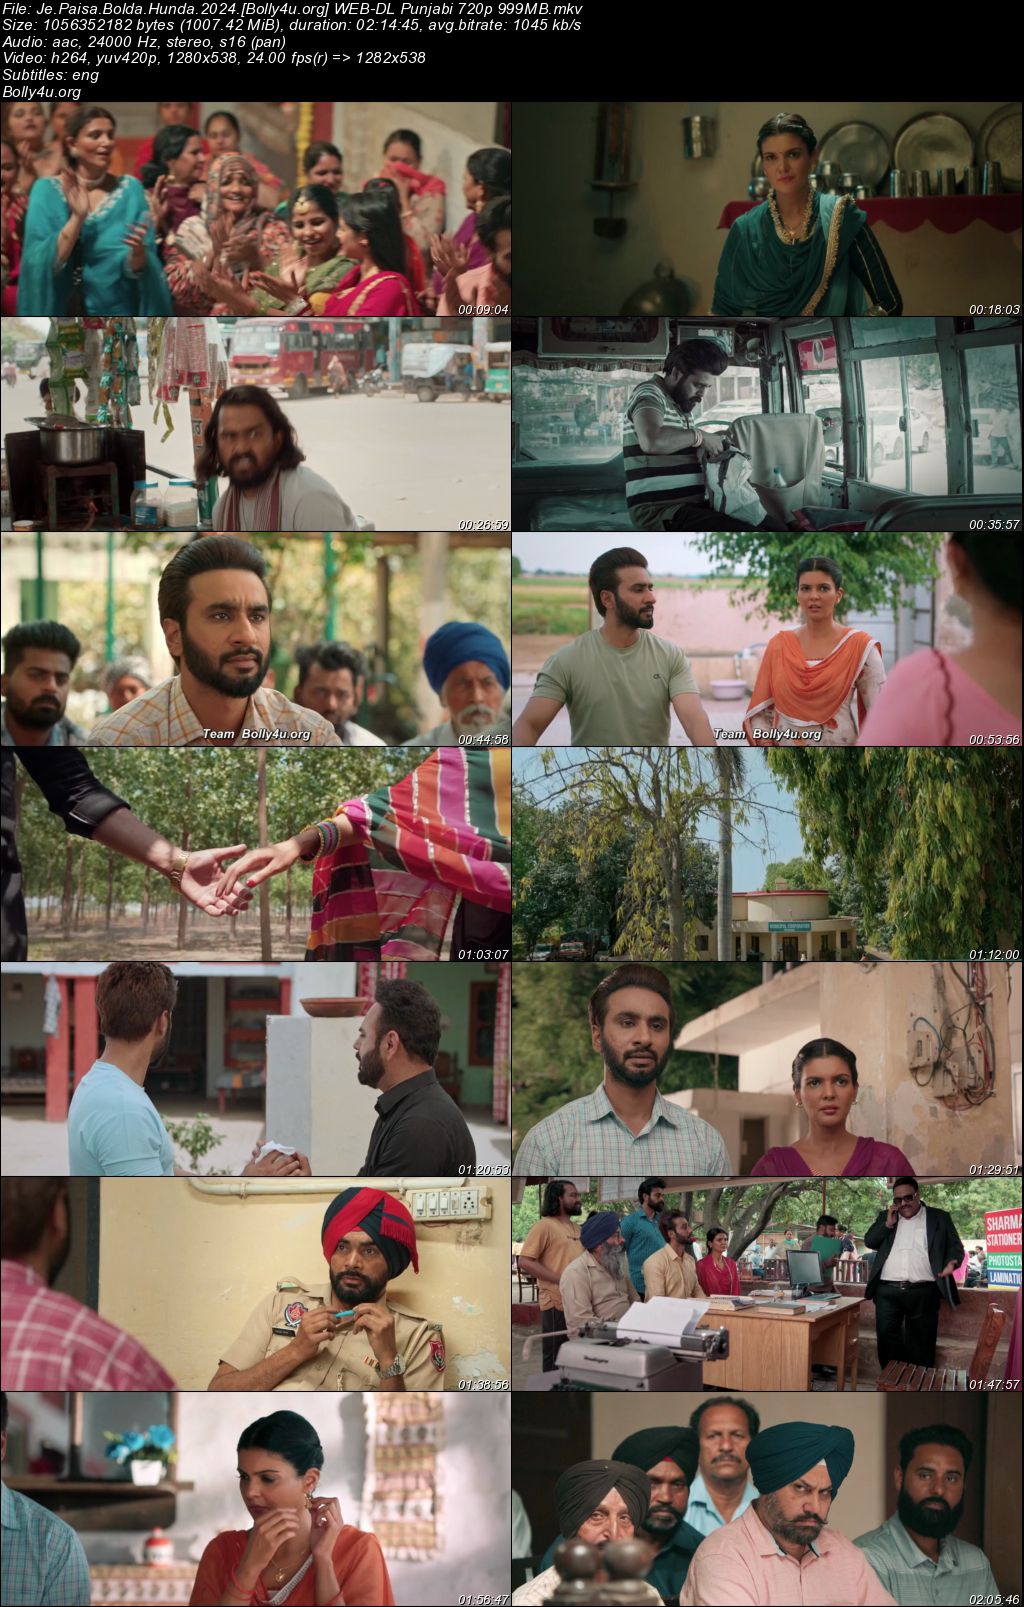 Je Paisa Bolda Hunda 2024 WEB-DL Punjabi Full Movie Download 1080p 720p 480p